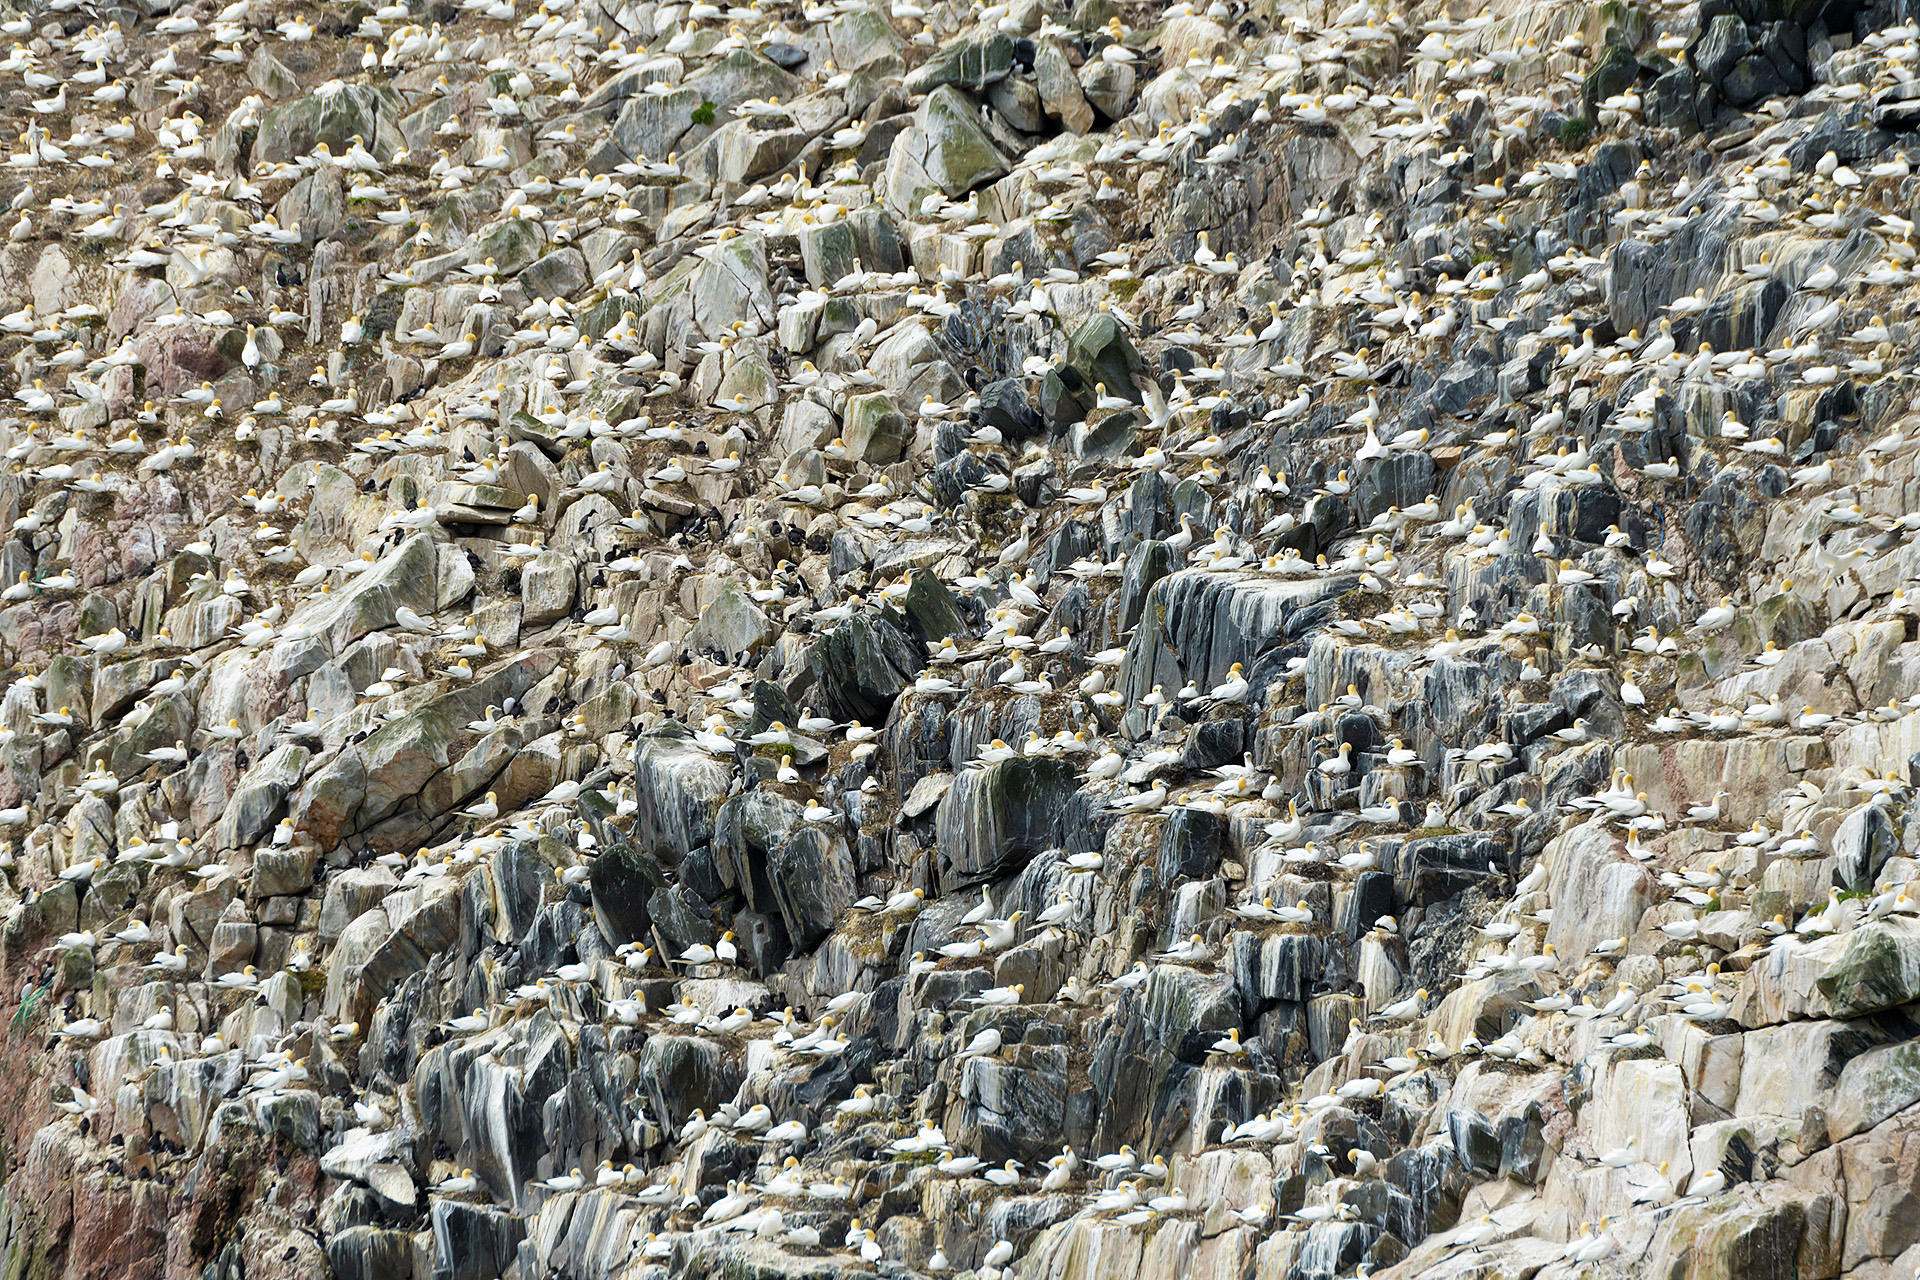 Gannet colony at the Flannan Isles